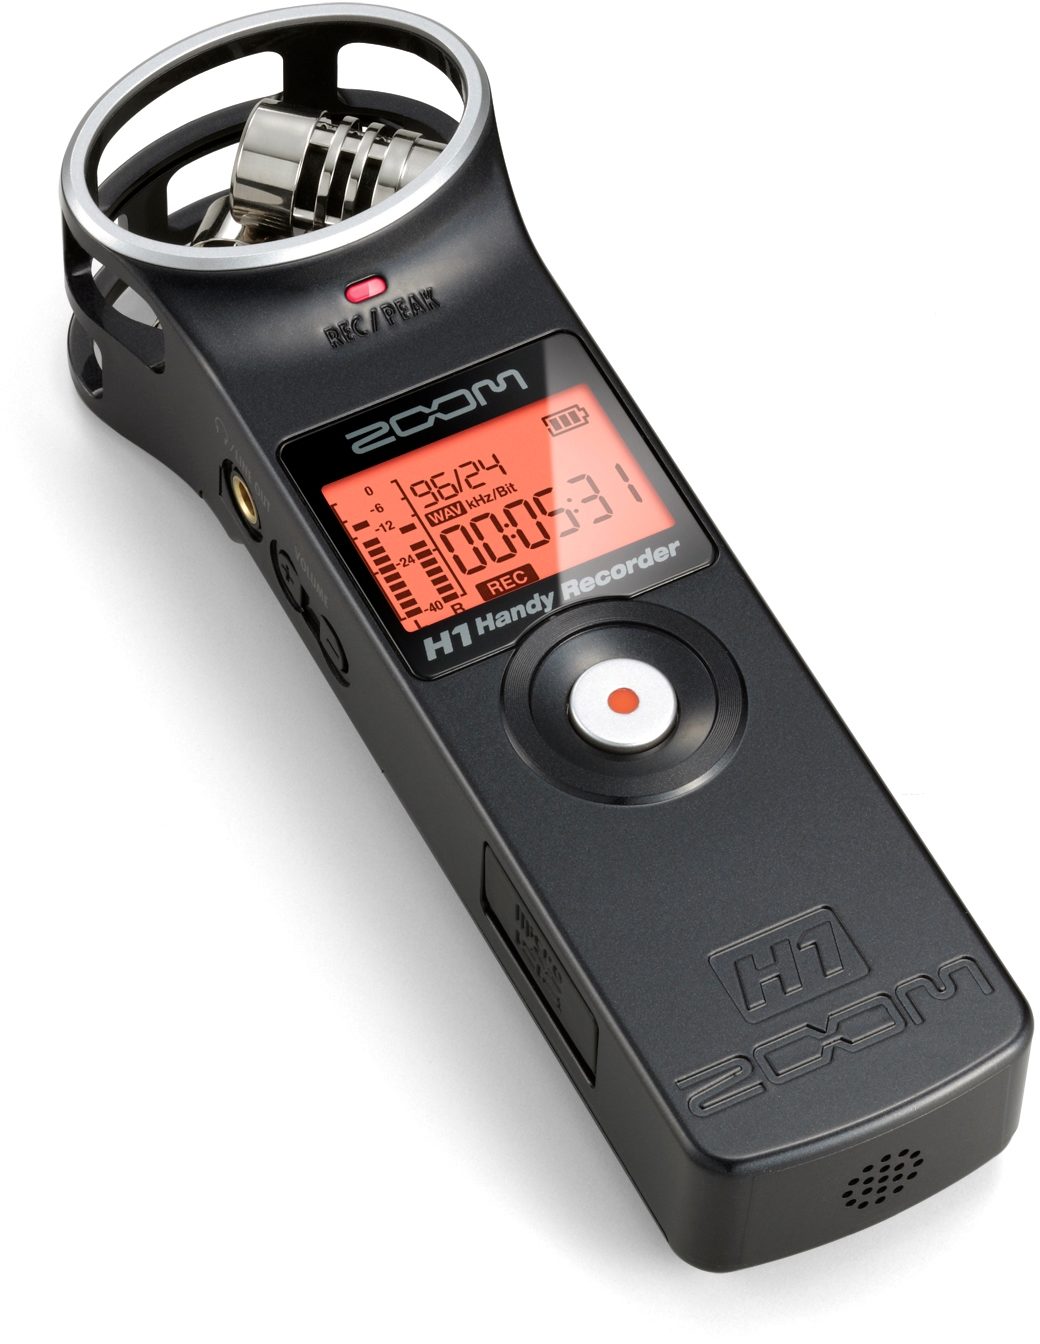 Zoom H-1 Portable Digital Recorder